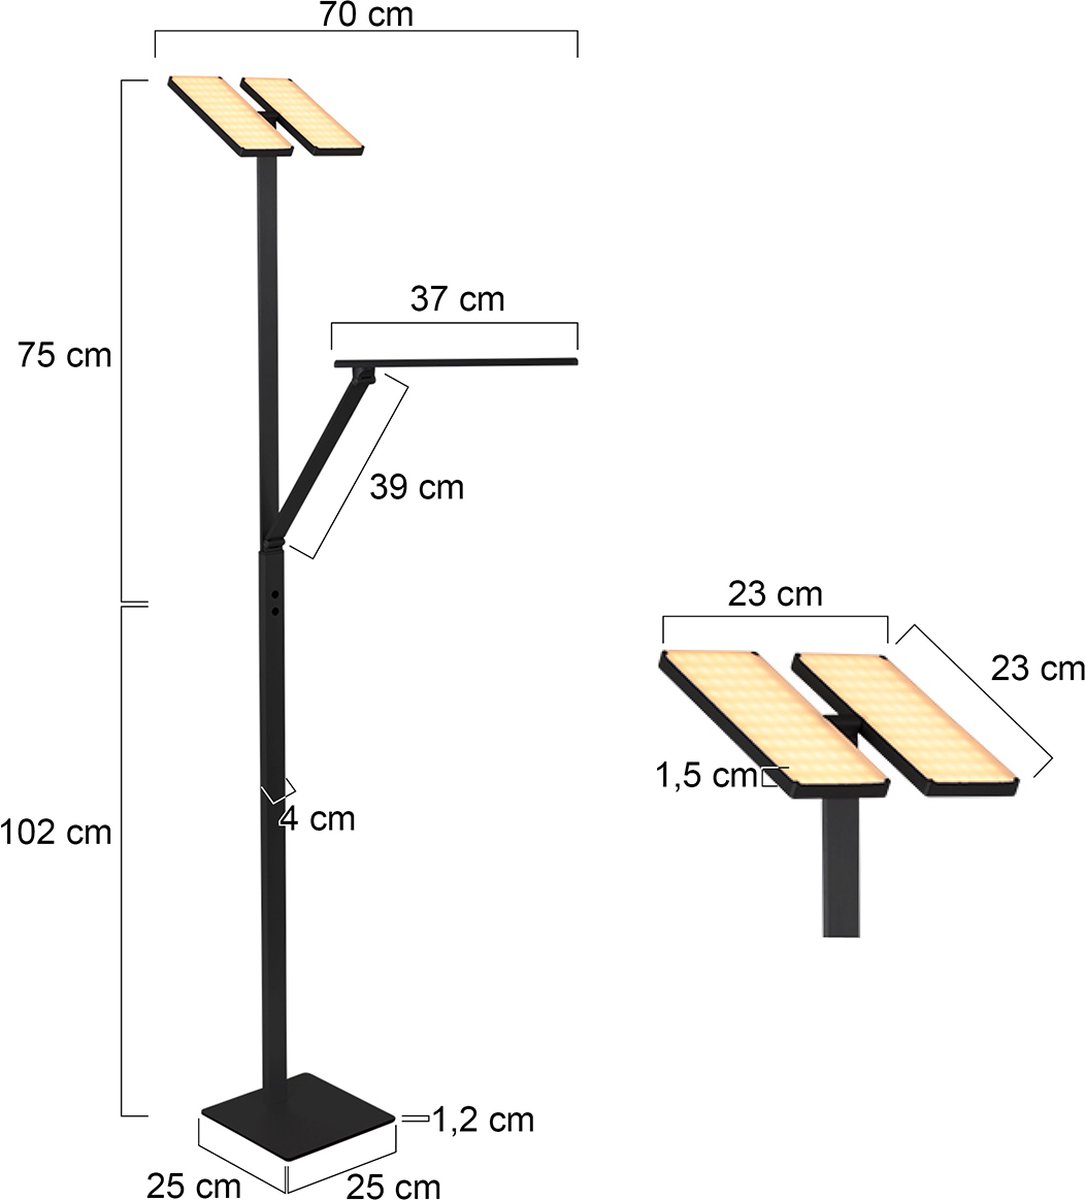 Vloerlamp - Bussandri Limited - Design - Glas - Design - LED - L: 80cm - Voor Binnen - Woonkamer - Eetkamer - Zwart